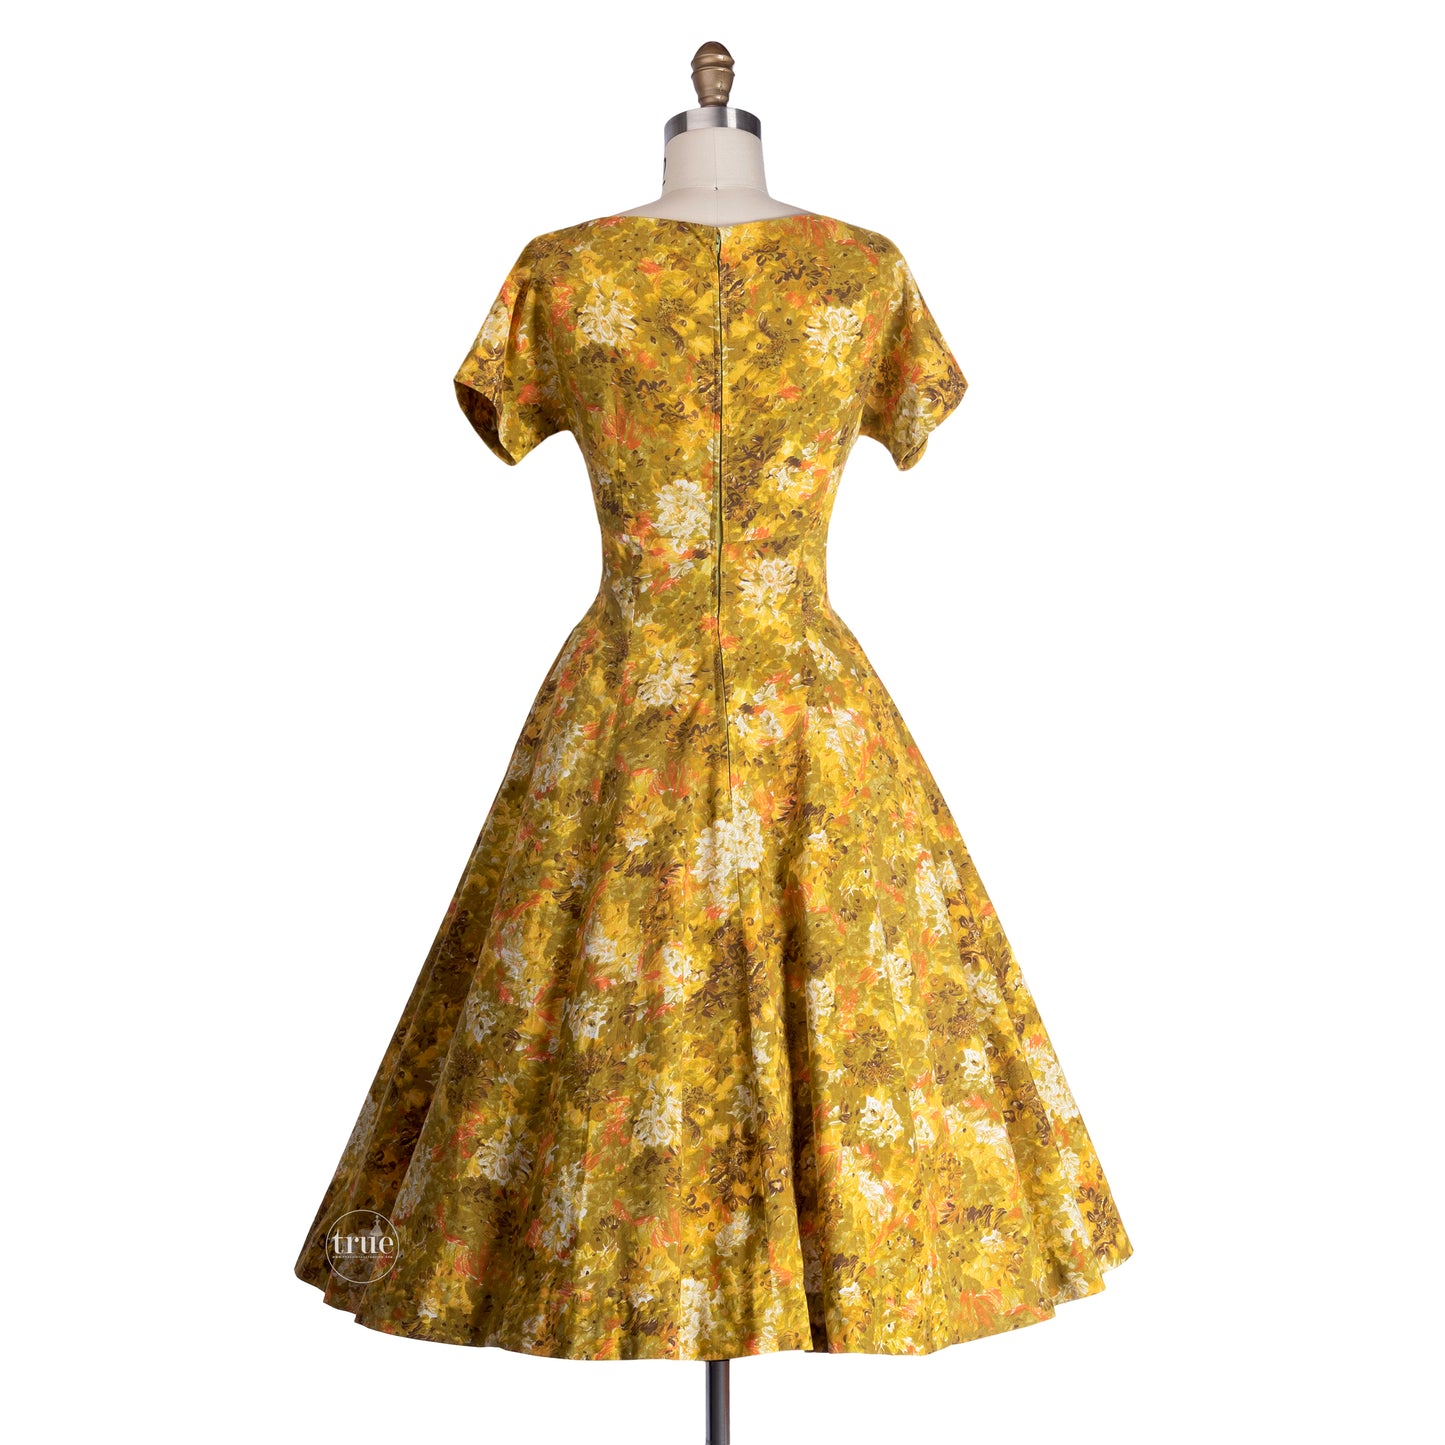 vintage 1950's dress ...beautiful monet-esque impressionist floral cotton full skirt dress